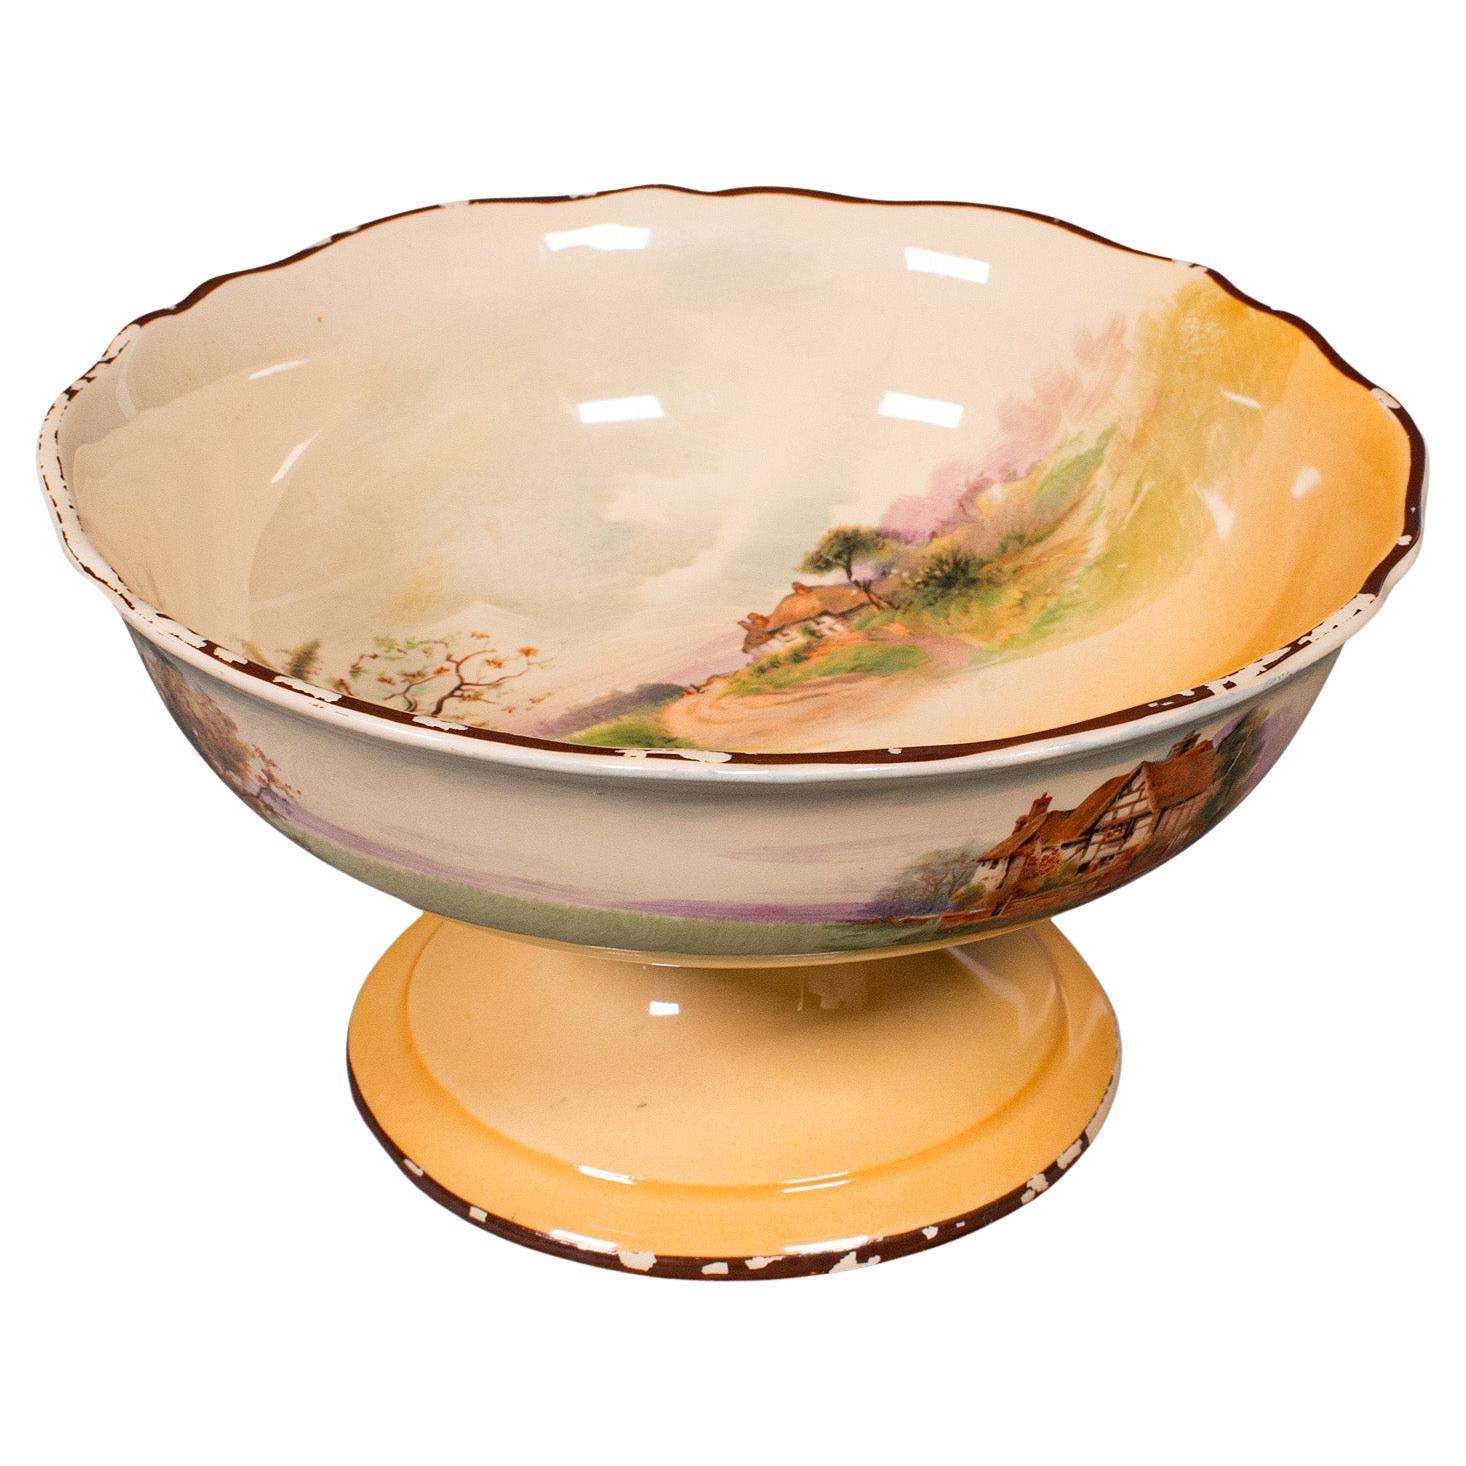 Vintage Decorative Footed Bowl, English, Ceramic, Serving Dish, Fruitbowl, 1930 For Sale